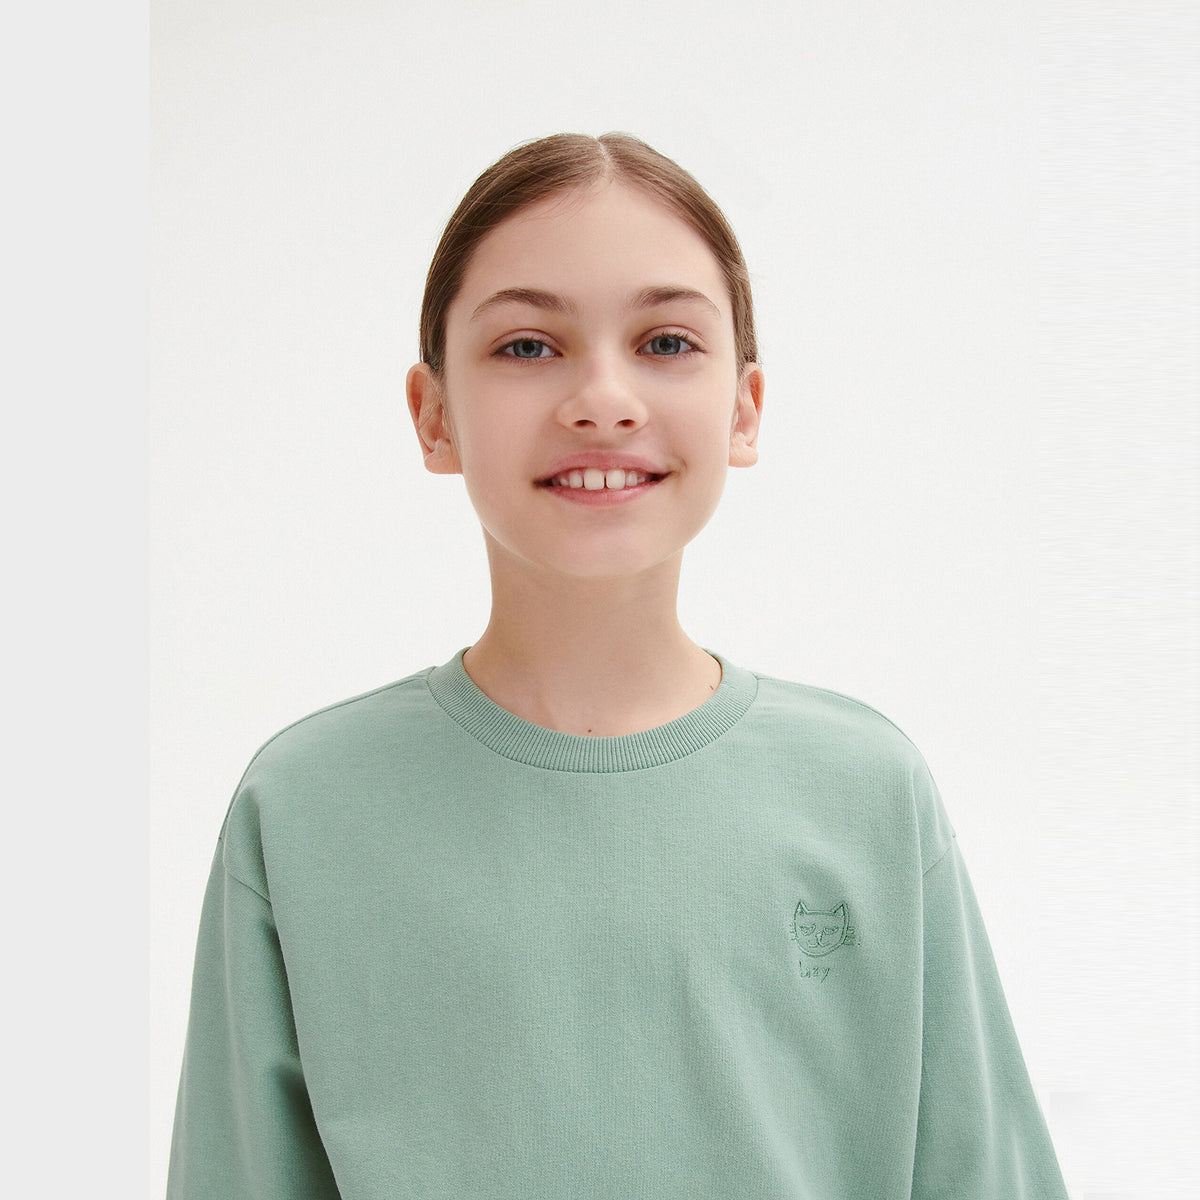 Premium Quality Girls Embroidered SweatShirt